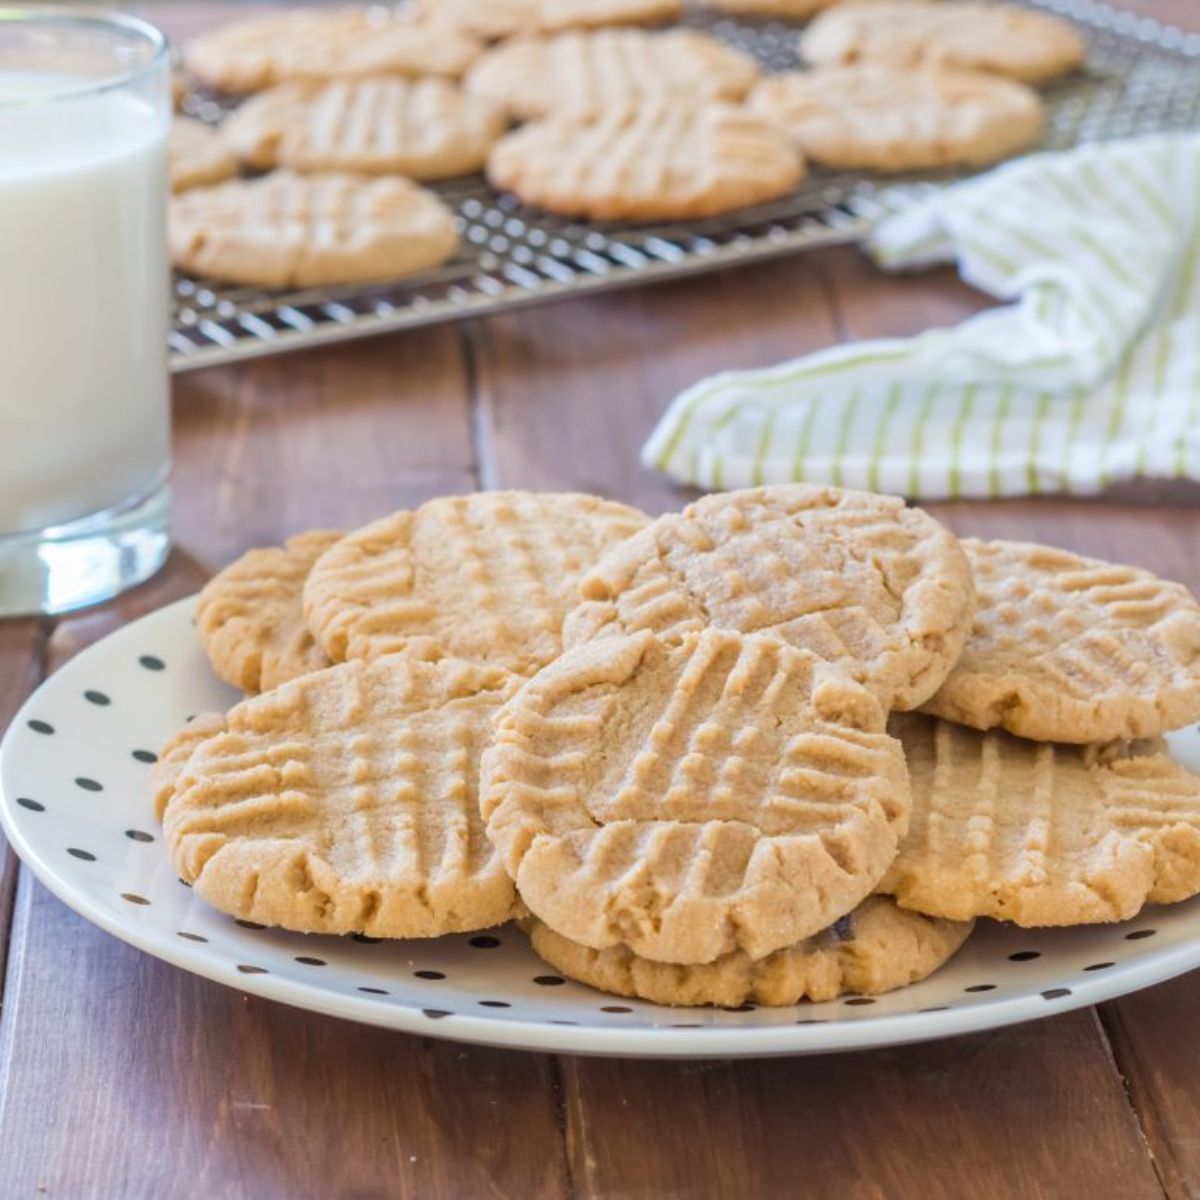 Crunchy Gluten-Free Peanut Butter Cookies on a gray plate.